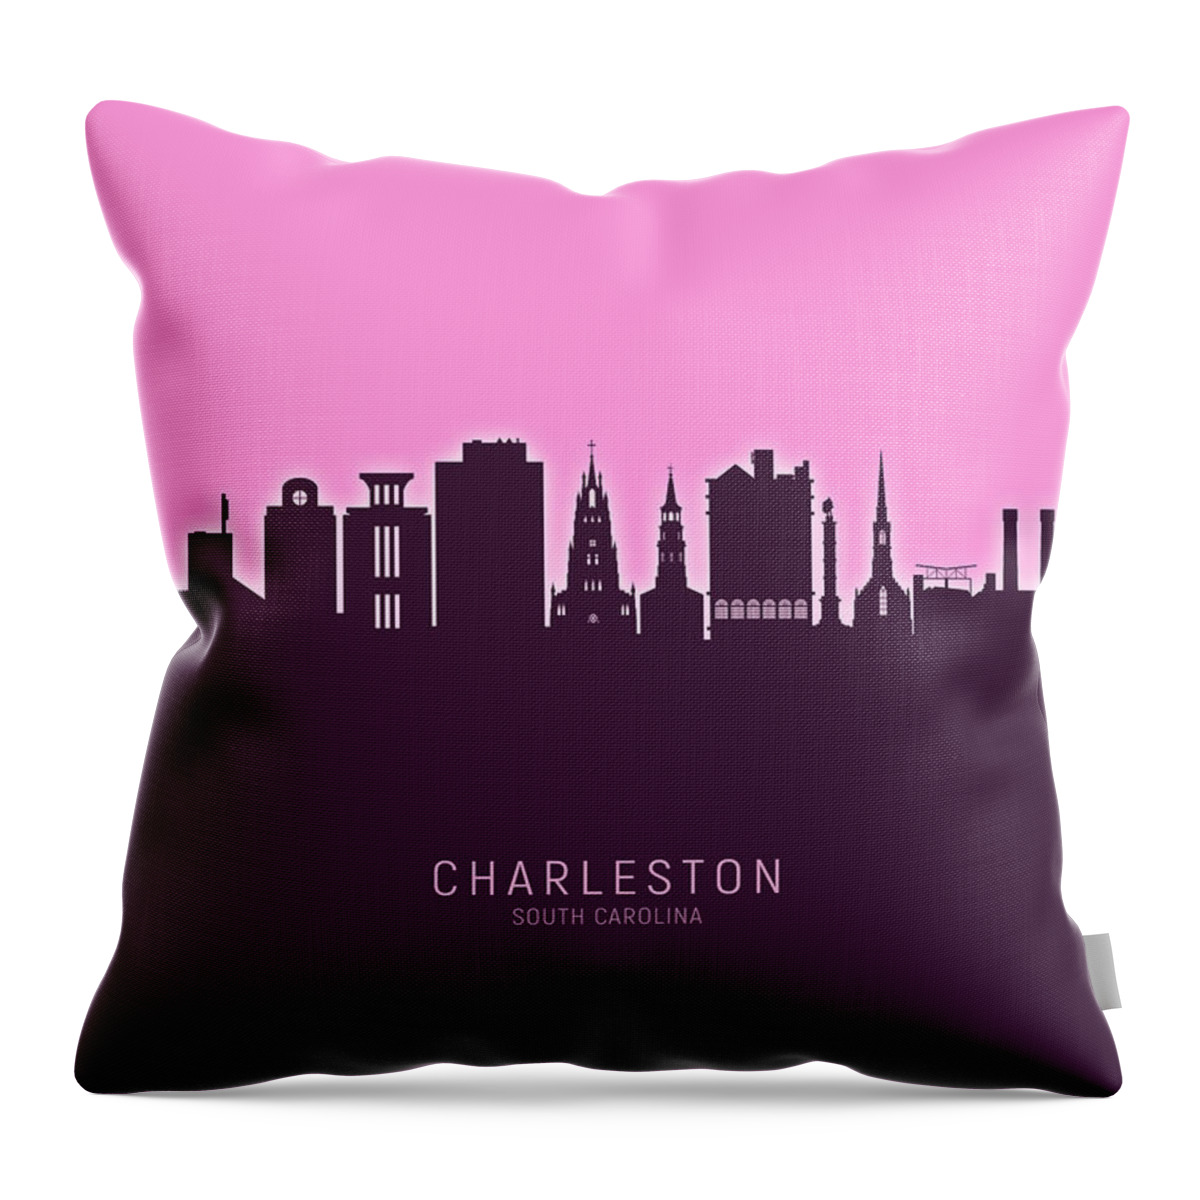 Charleston Throw Pillow featuring the digital art Charleston South Carolina Skyline by Michael Tompsett